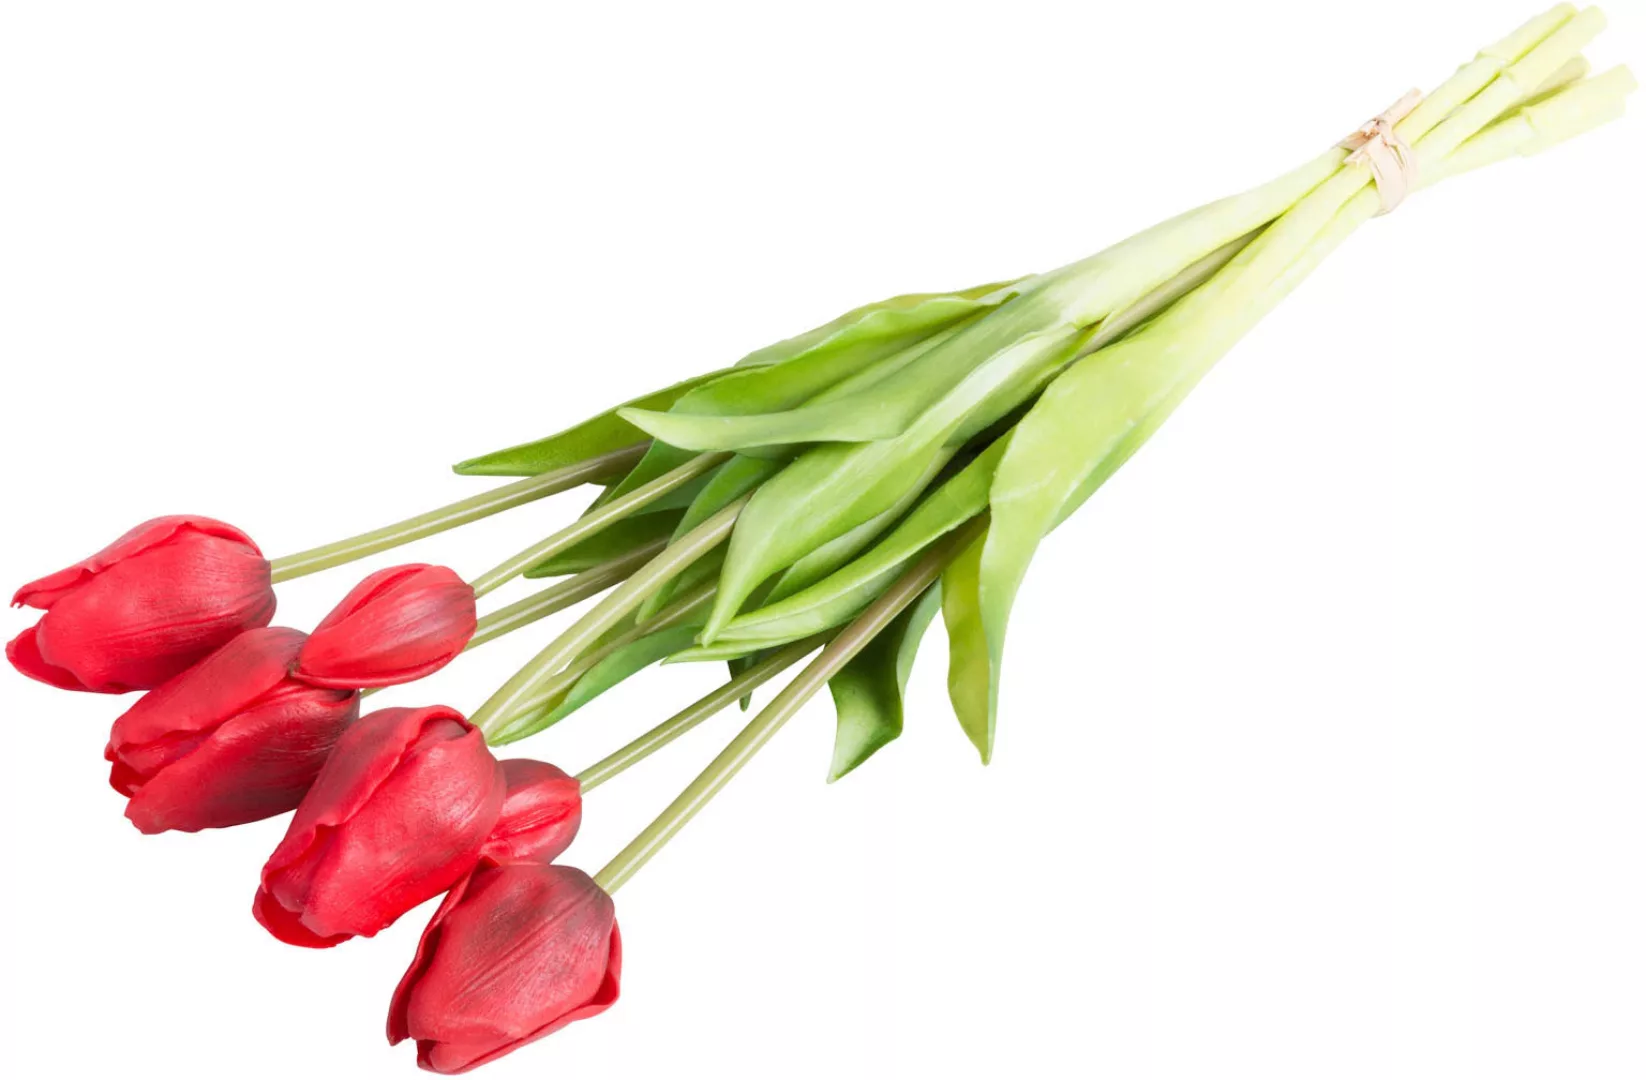 Botanic-Haus Kunstblume "Tulpenbündel" günstig online kaufen